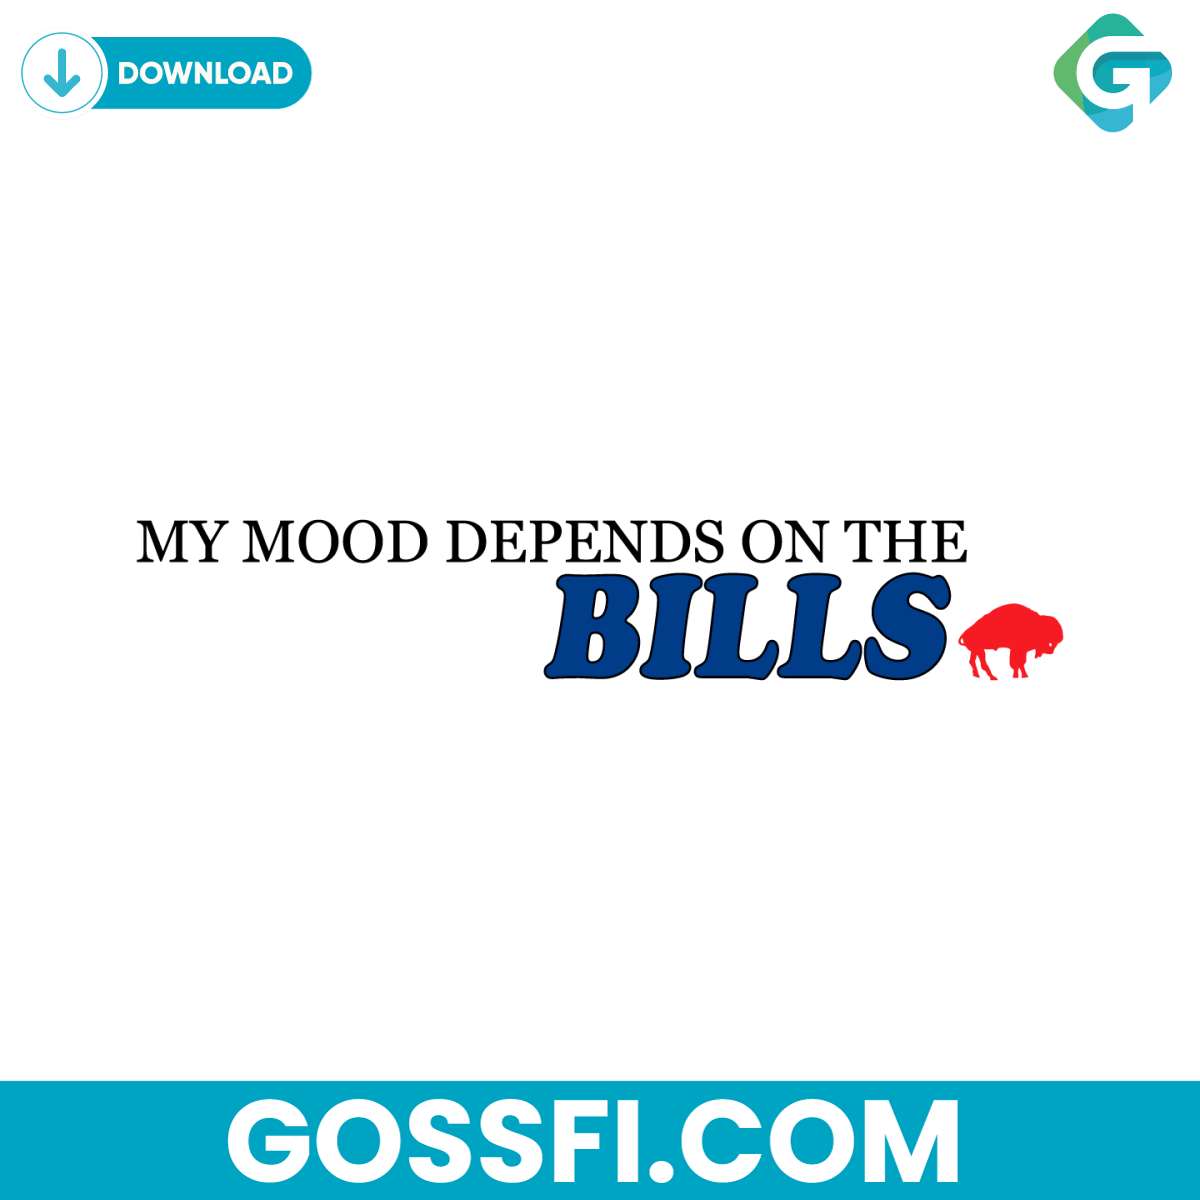 my-mood-depends-on-the-bills-buffalo-football-svg